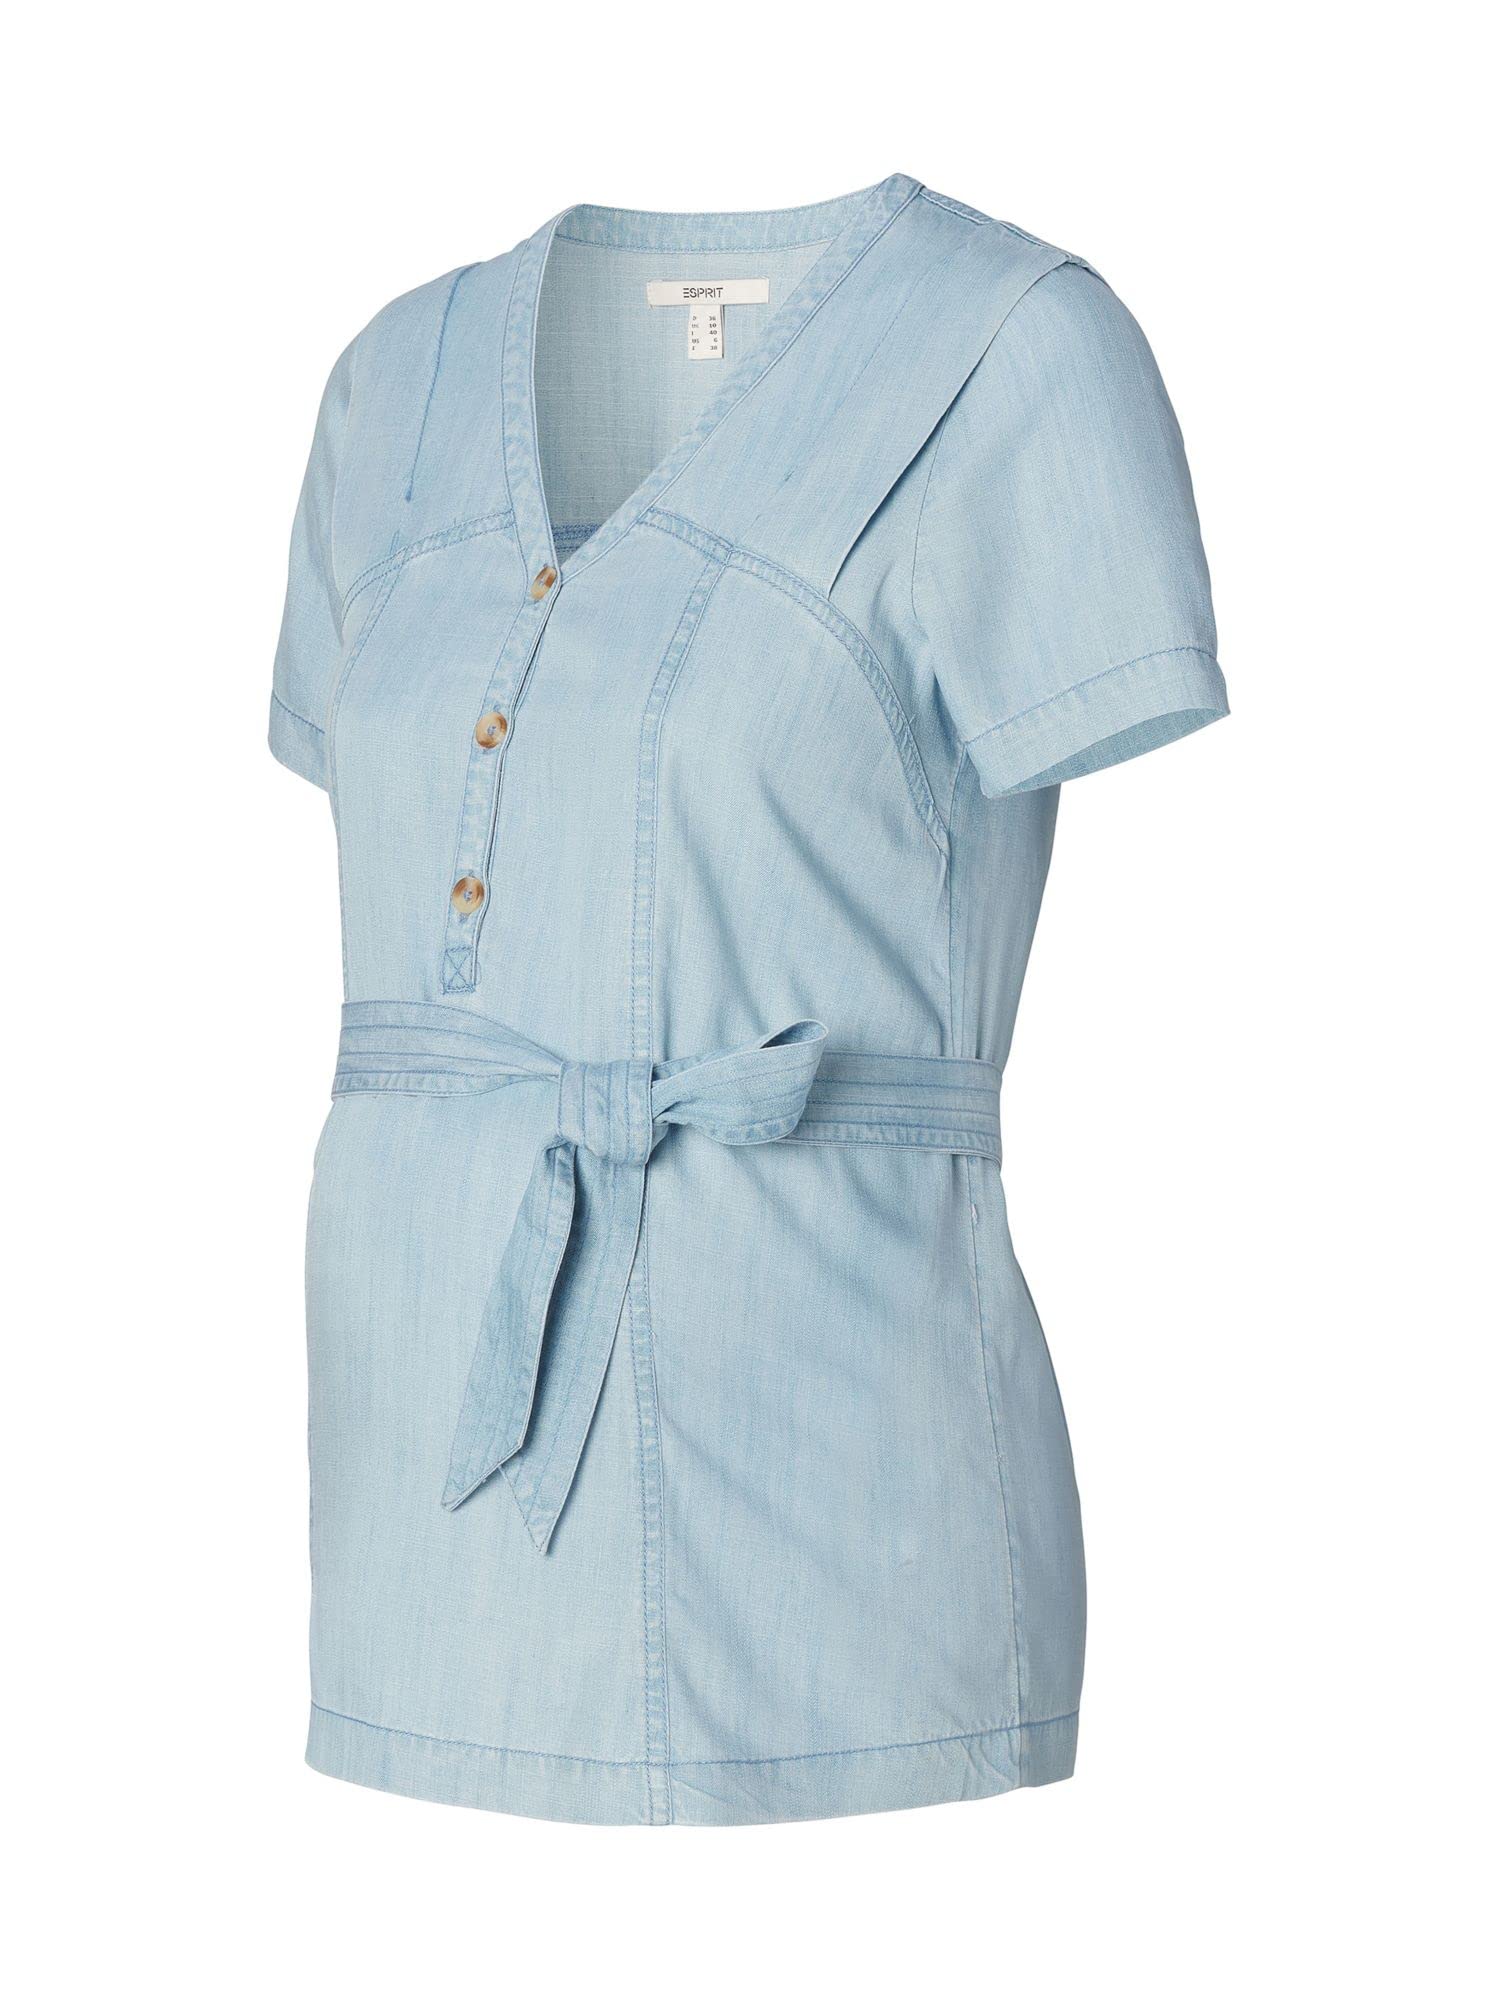 ESPRIT Damen Blouse Nursing Short Sleeve Bluse, Lightwash-950, 36